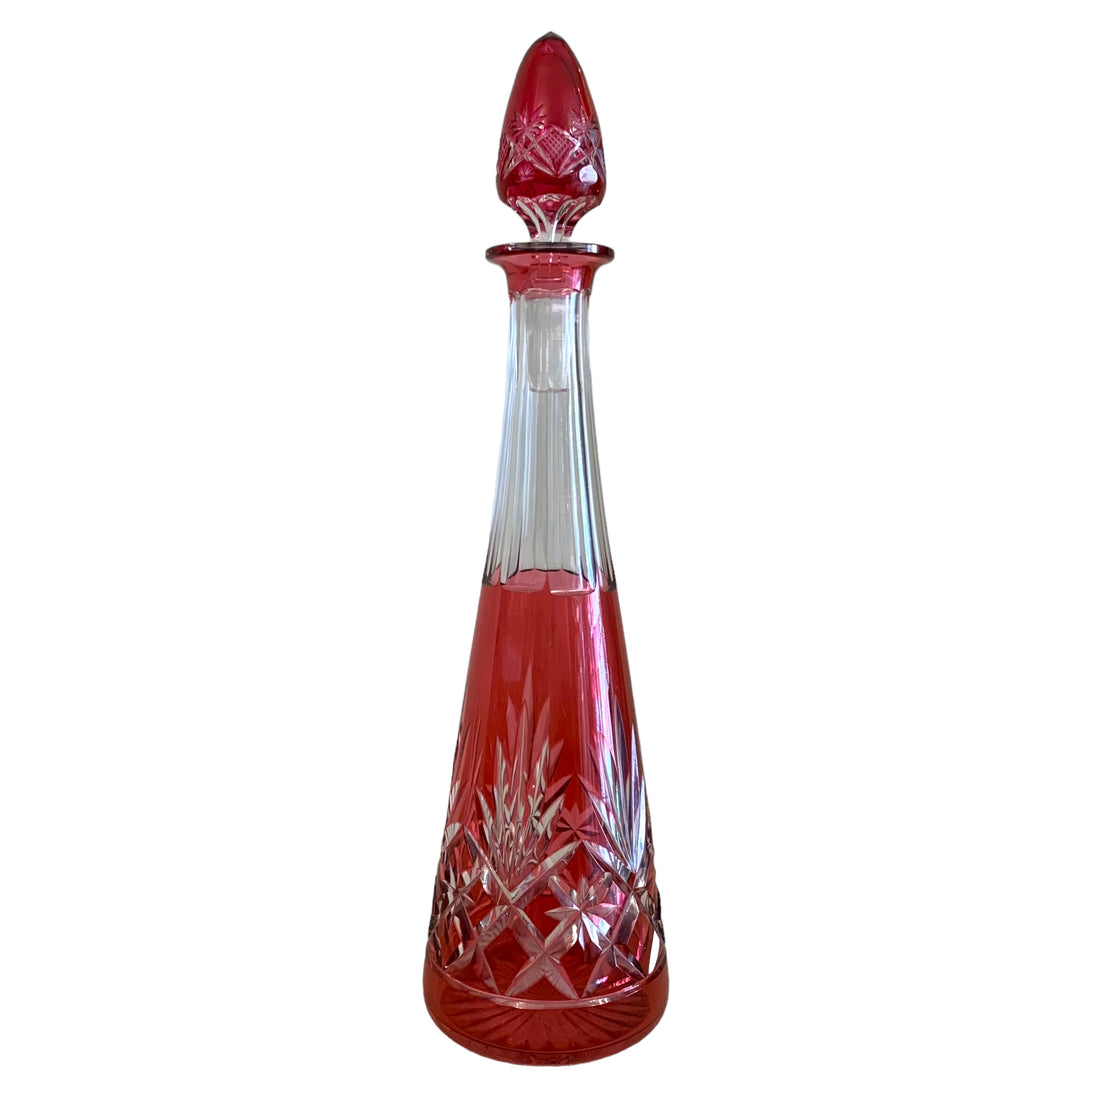 Botella de cristal cortado checo color rojo intenso. SXX